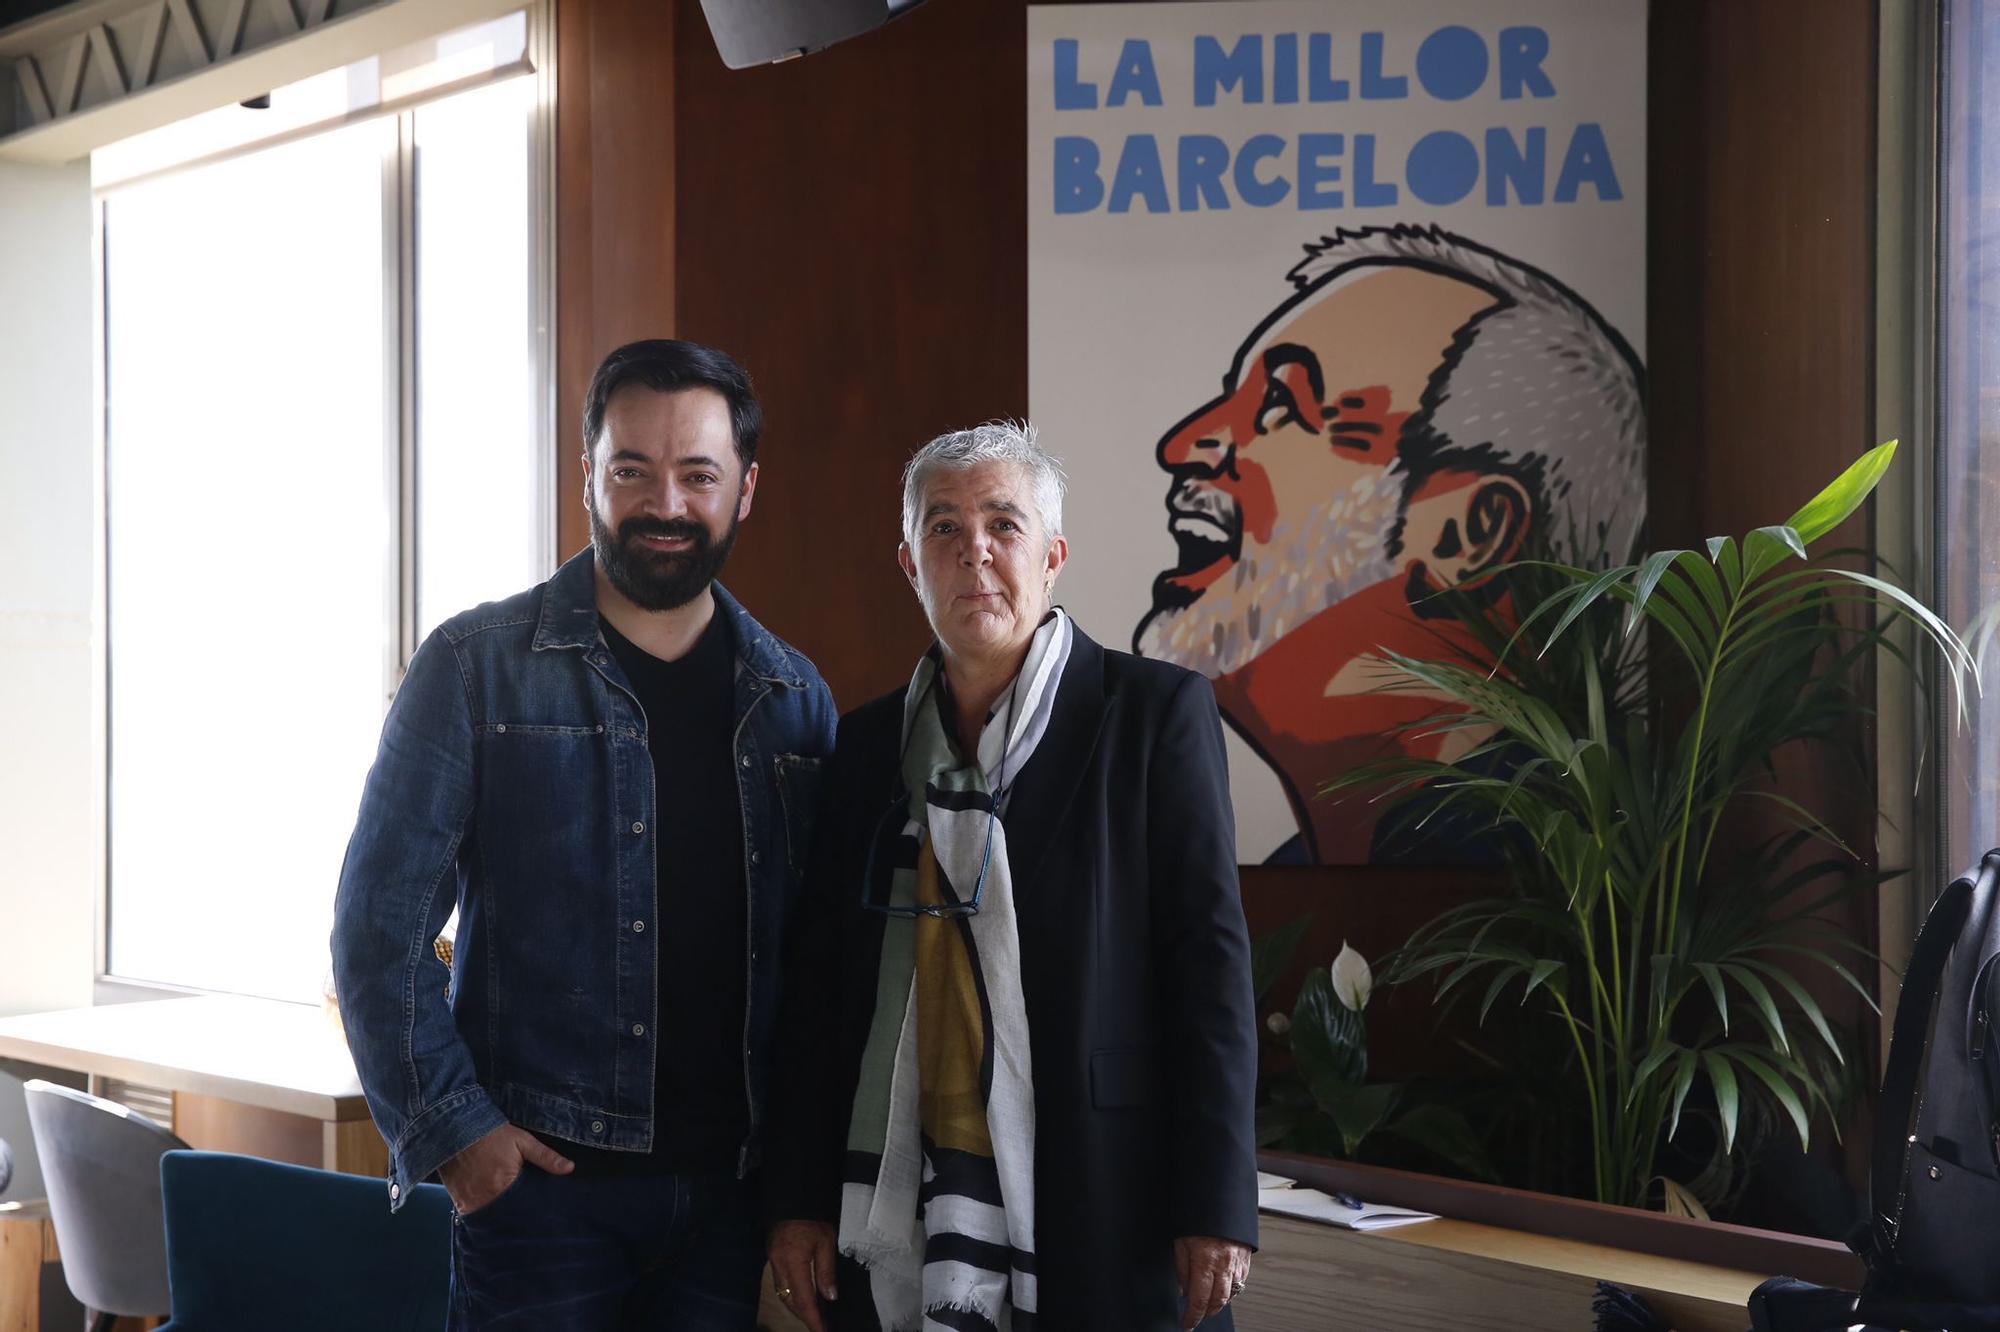 El humorista Toni Cano y la promotora social Natalia Bettonica, portavoces de la plataforma pro-Collboni